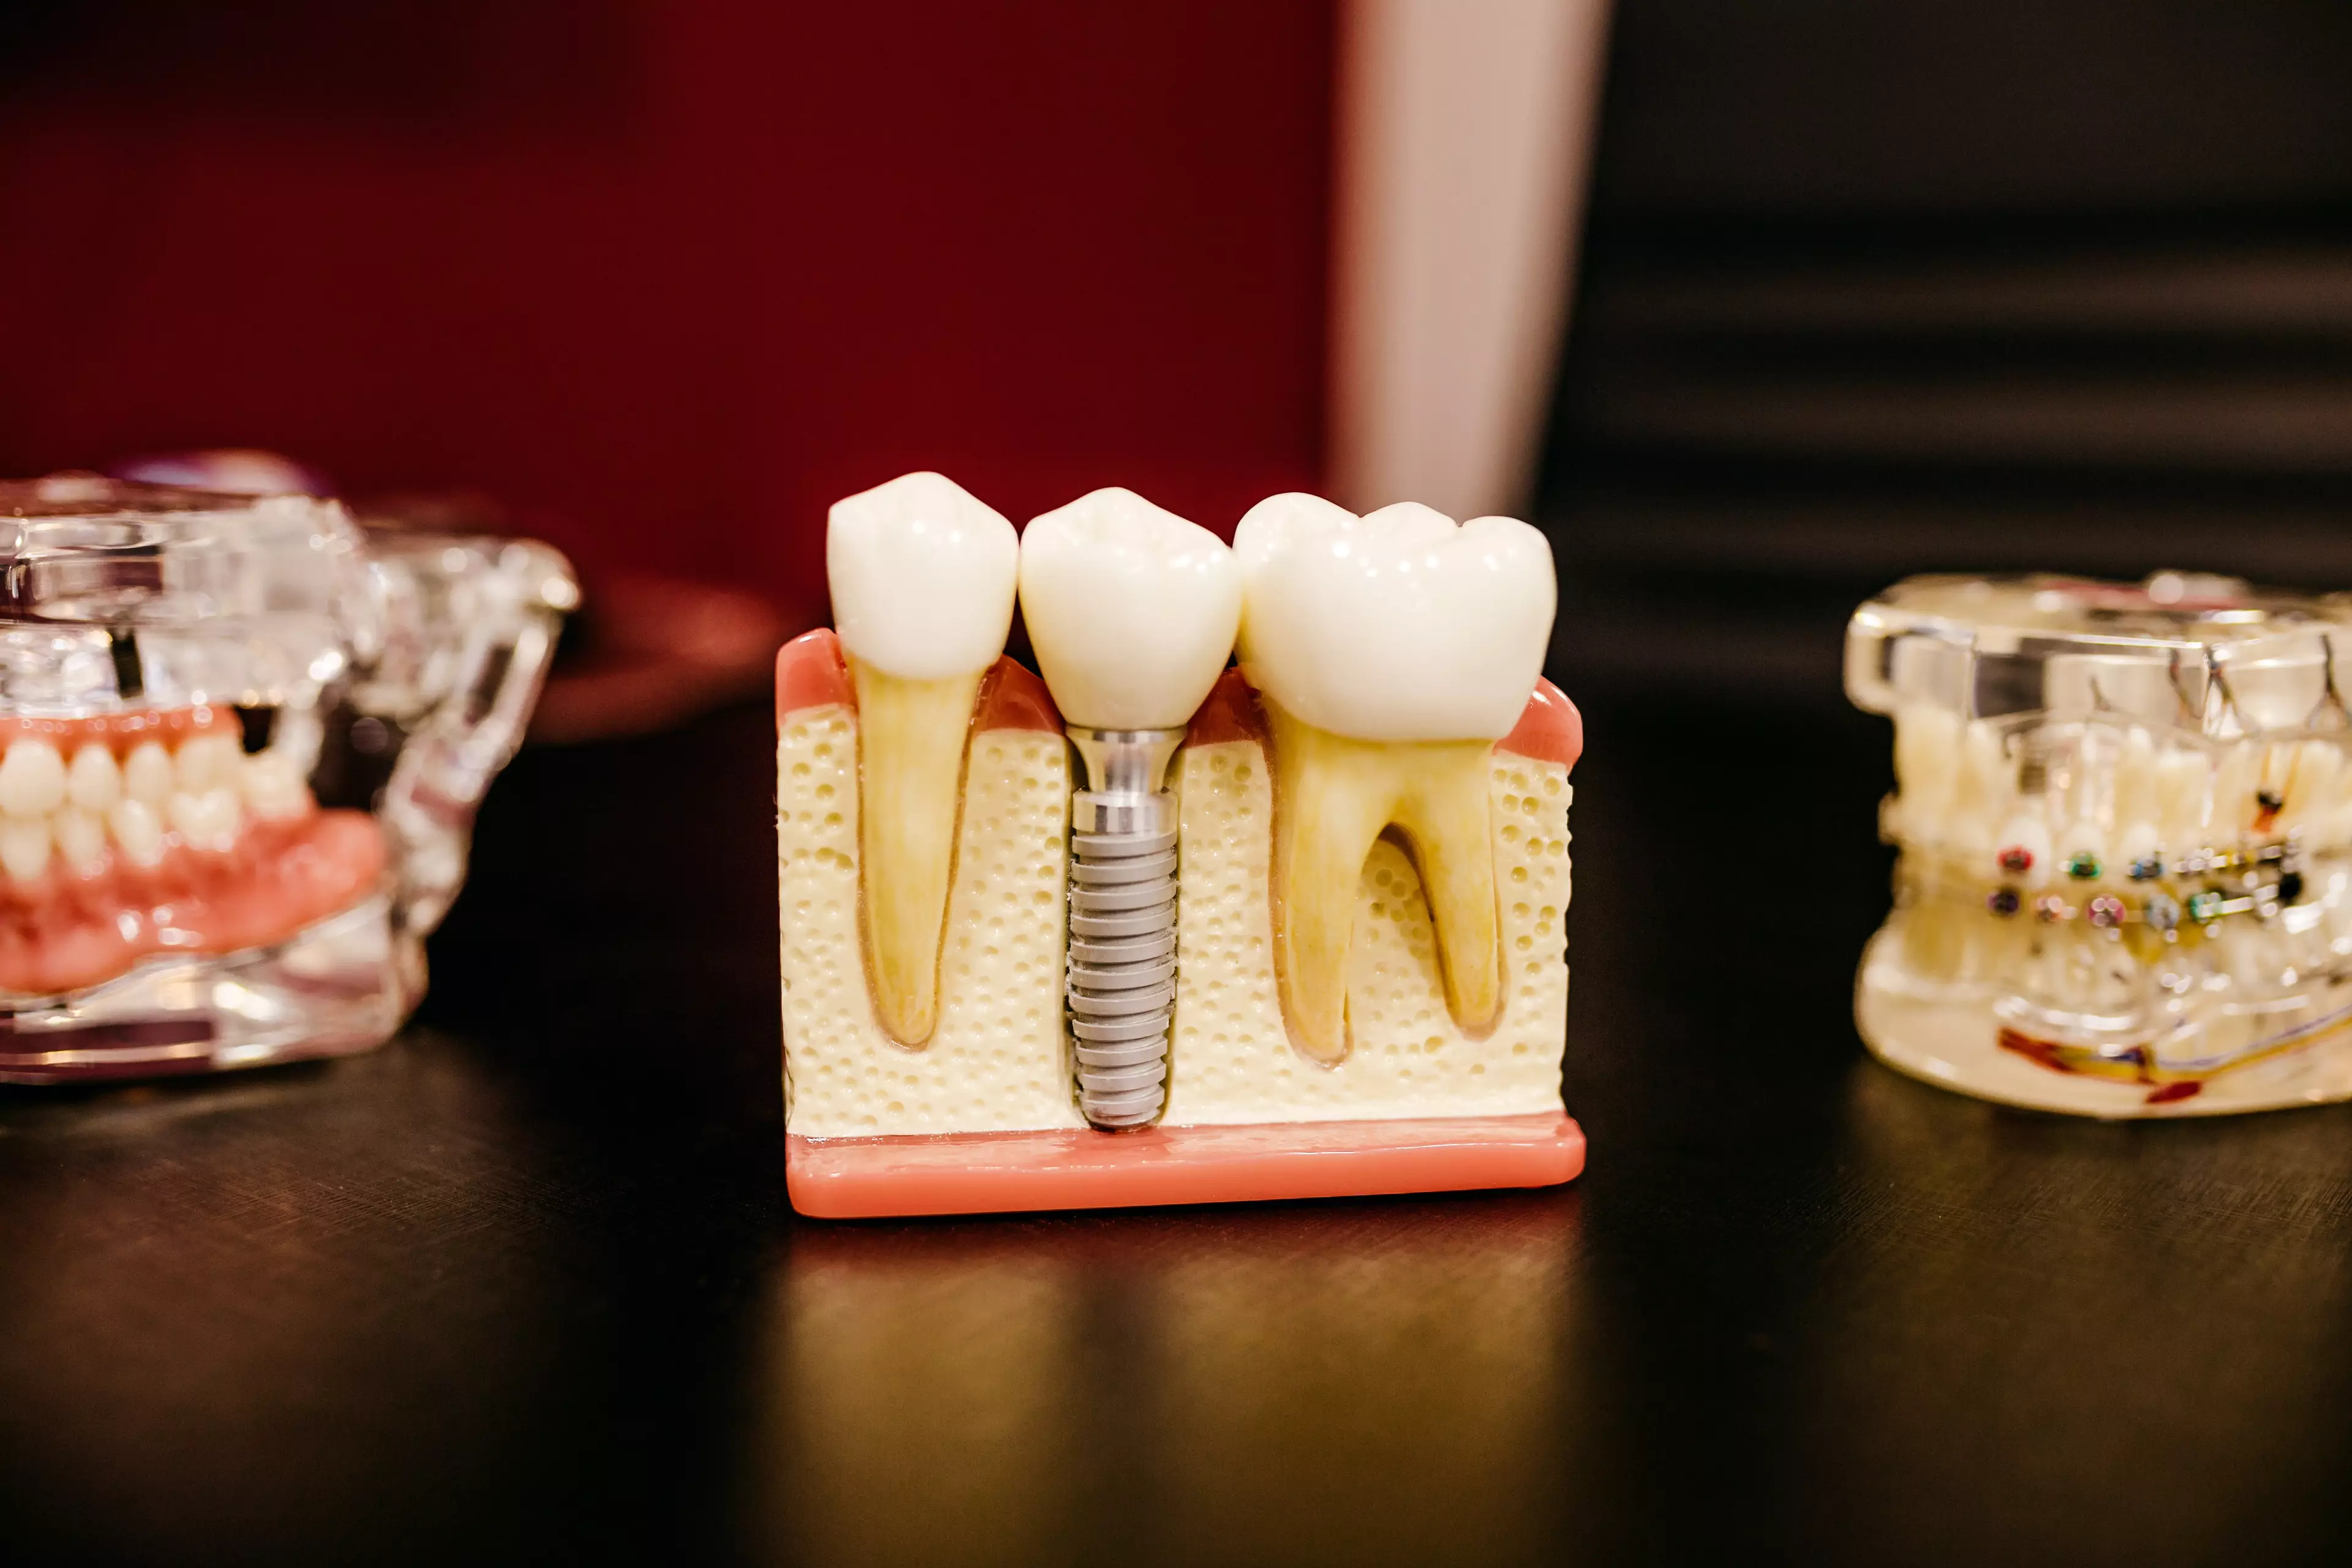 Wisdom teeth are the final set of teeth to emerge in early adulthood (